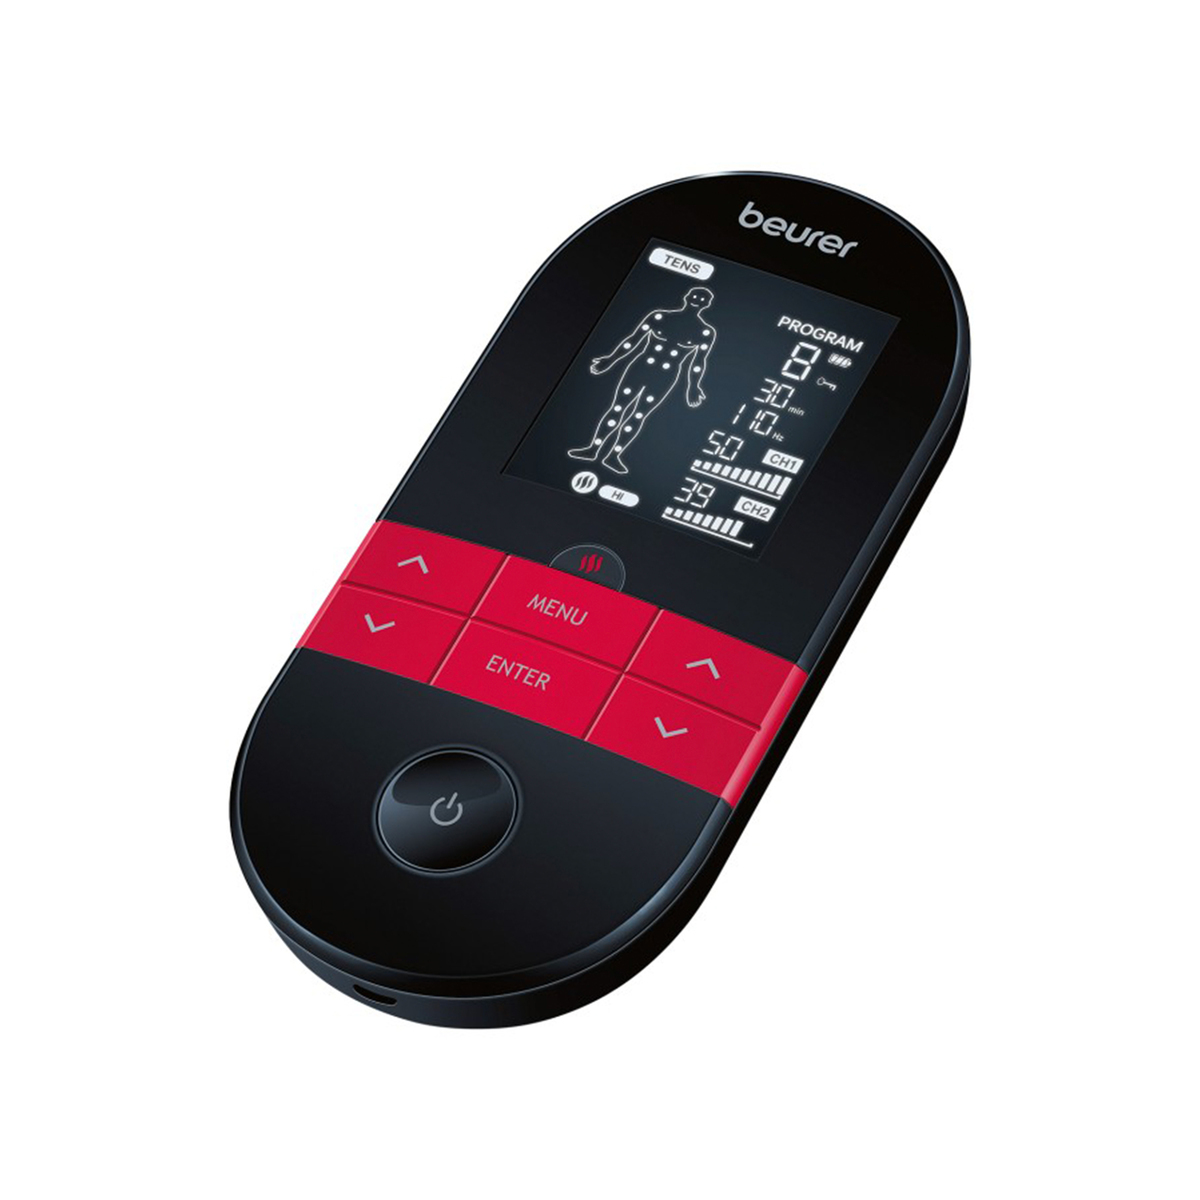 Beurer EM 59 Digital TENS device with heat function